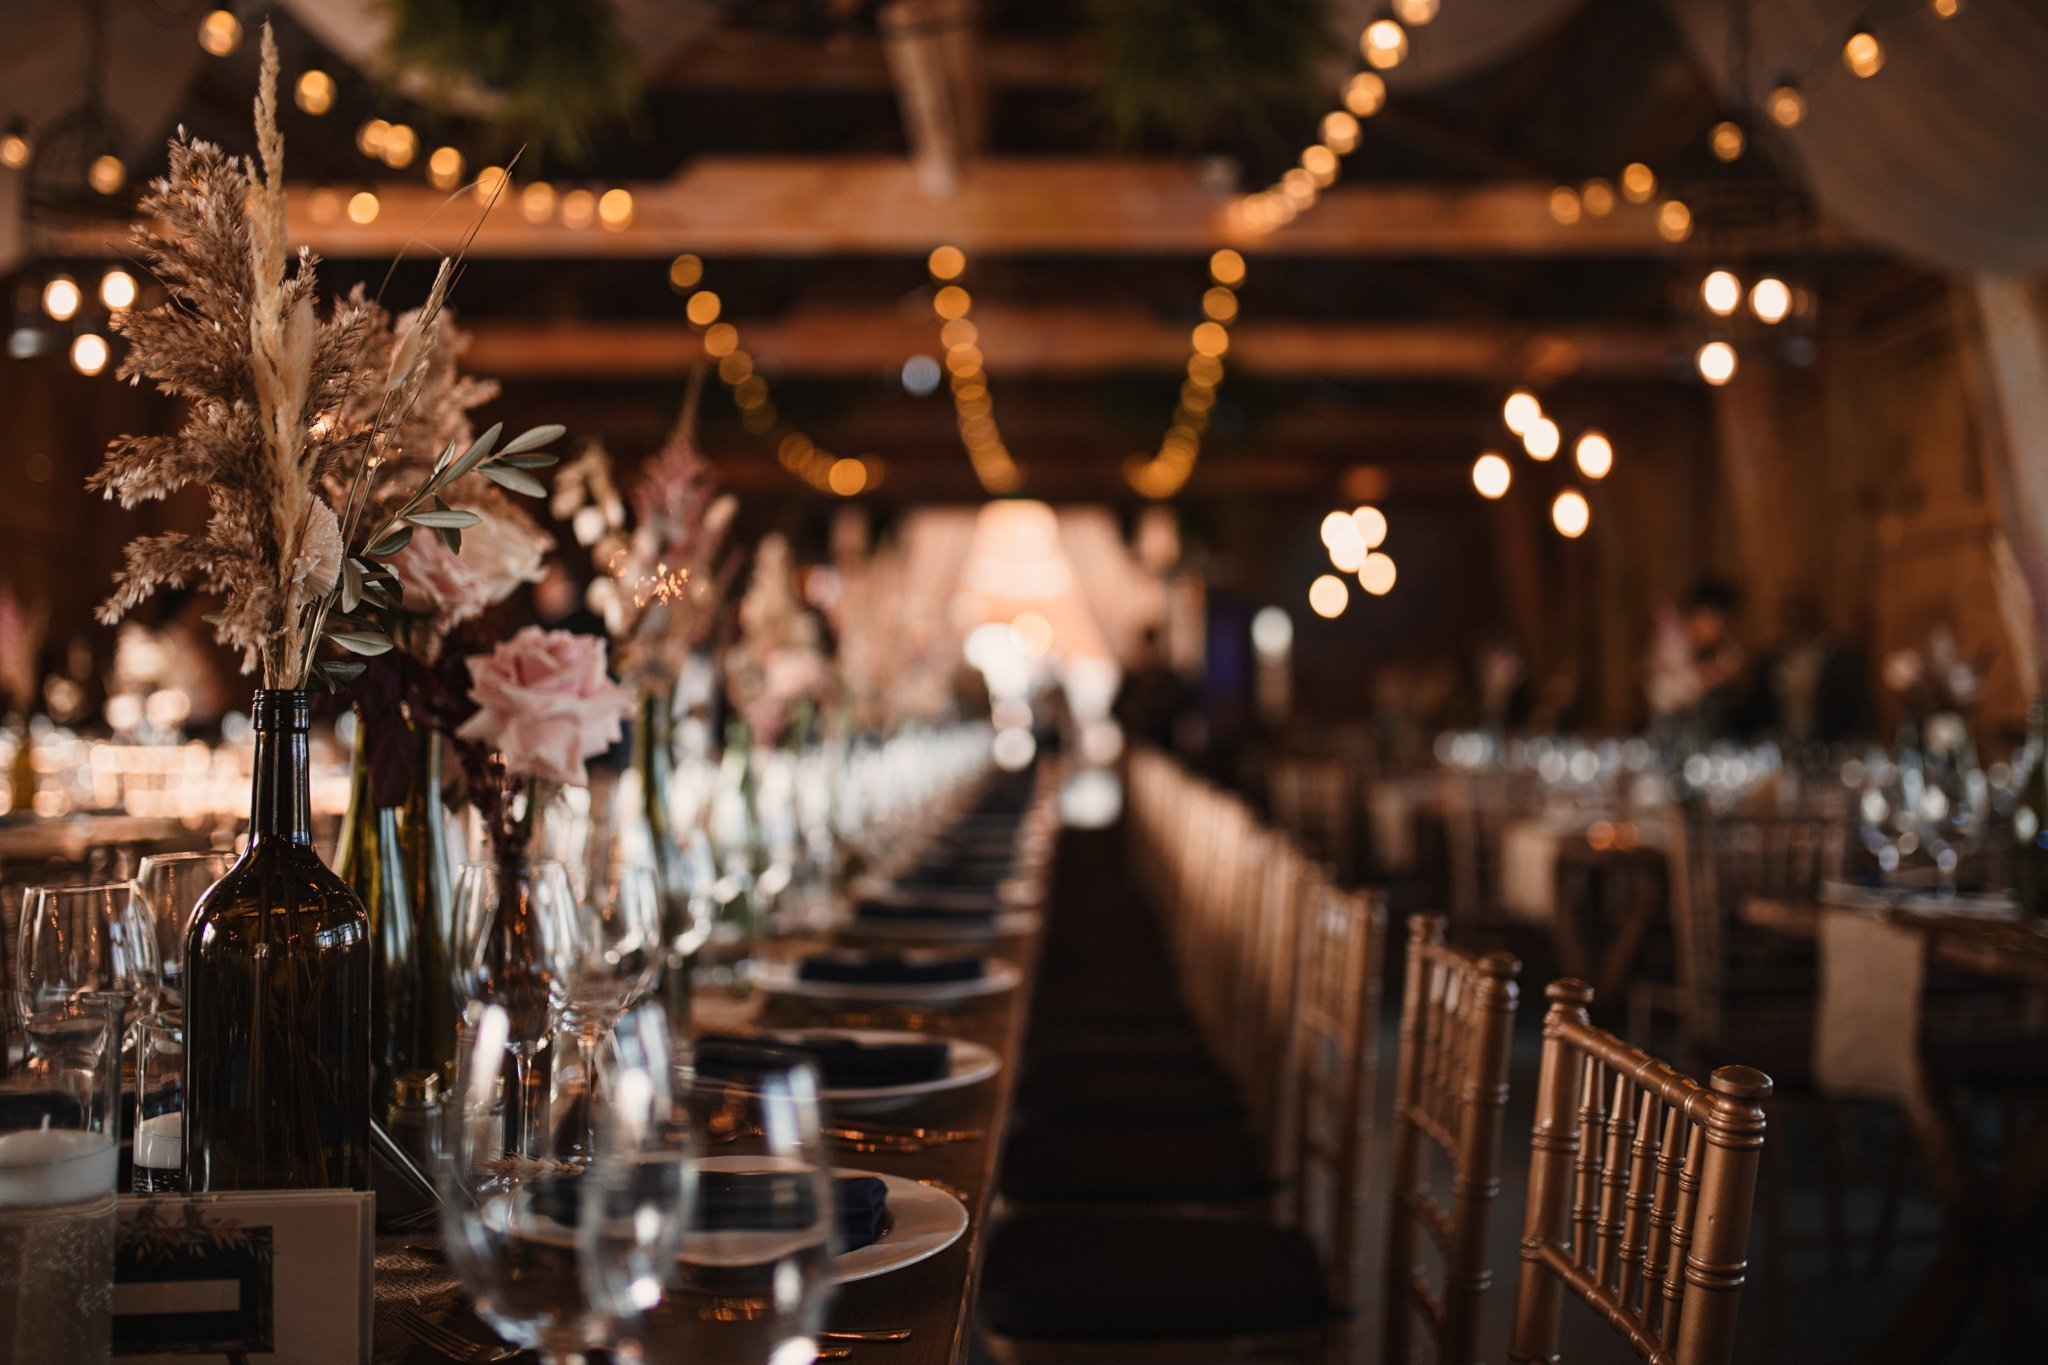 green spot wedding barn - Jurnal Fotografic - Wedding barn reception table decor